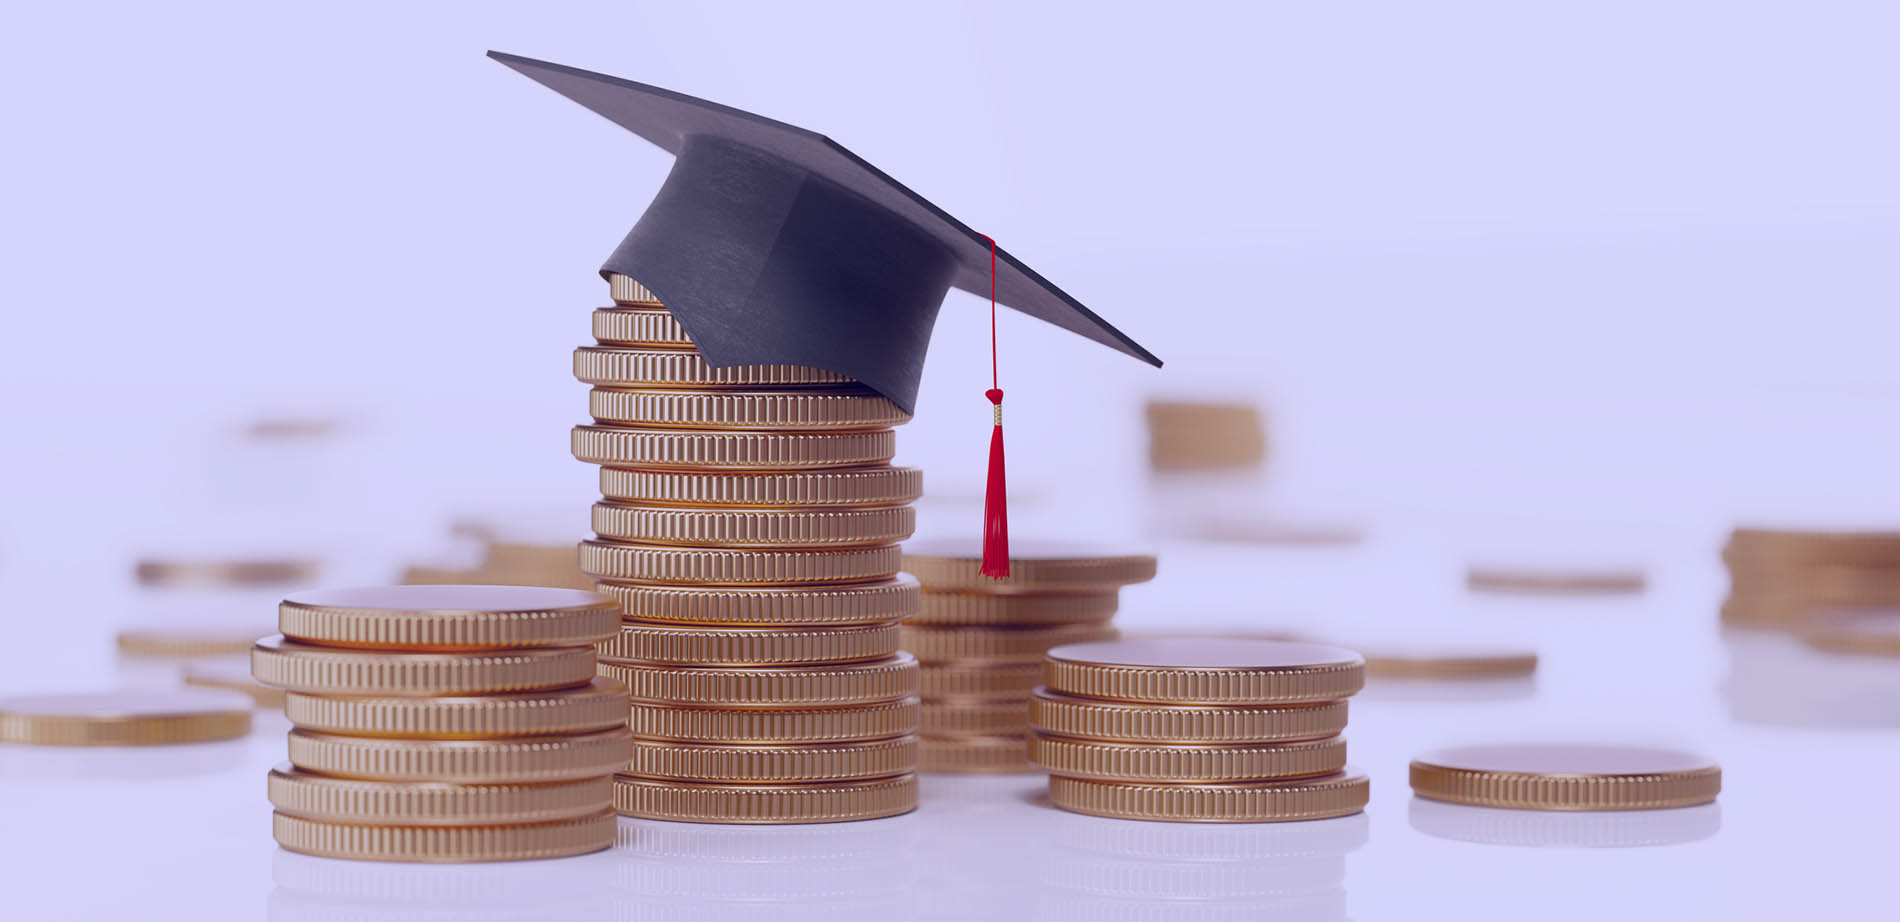 A graduation cap atop a stack of coins